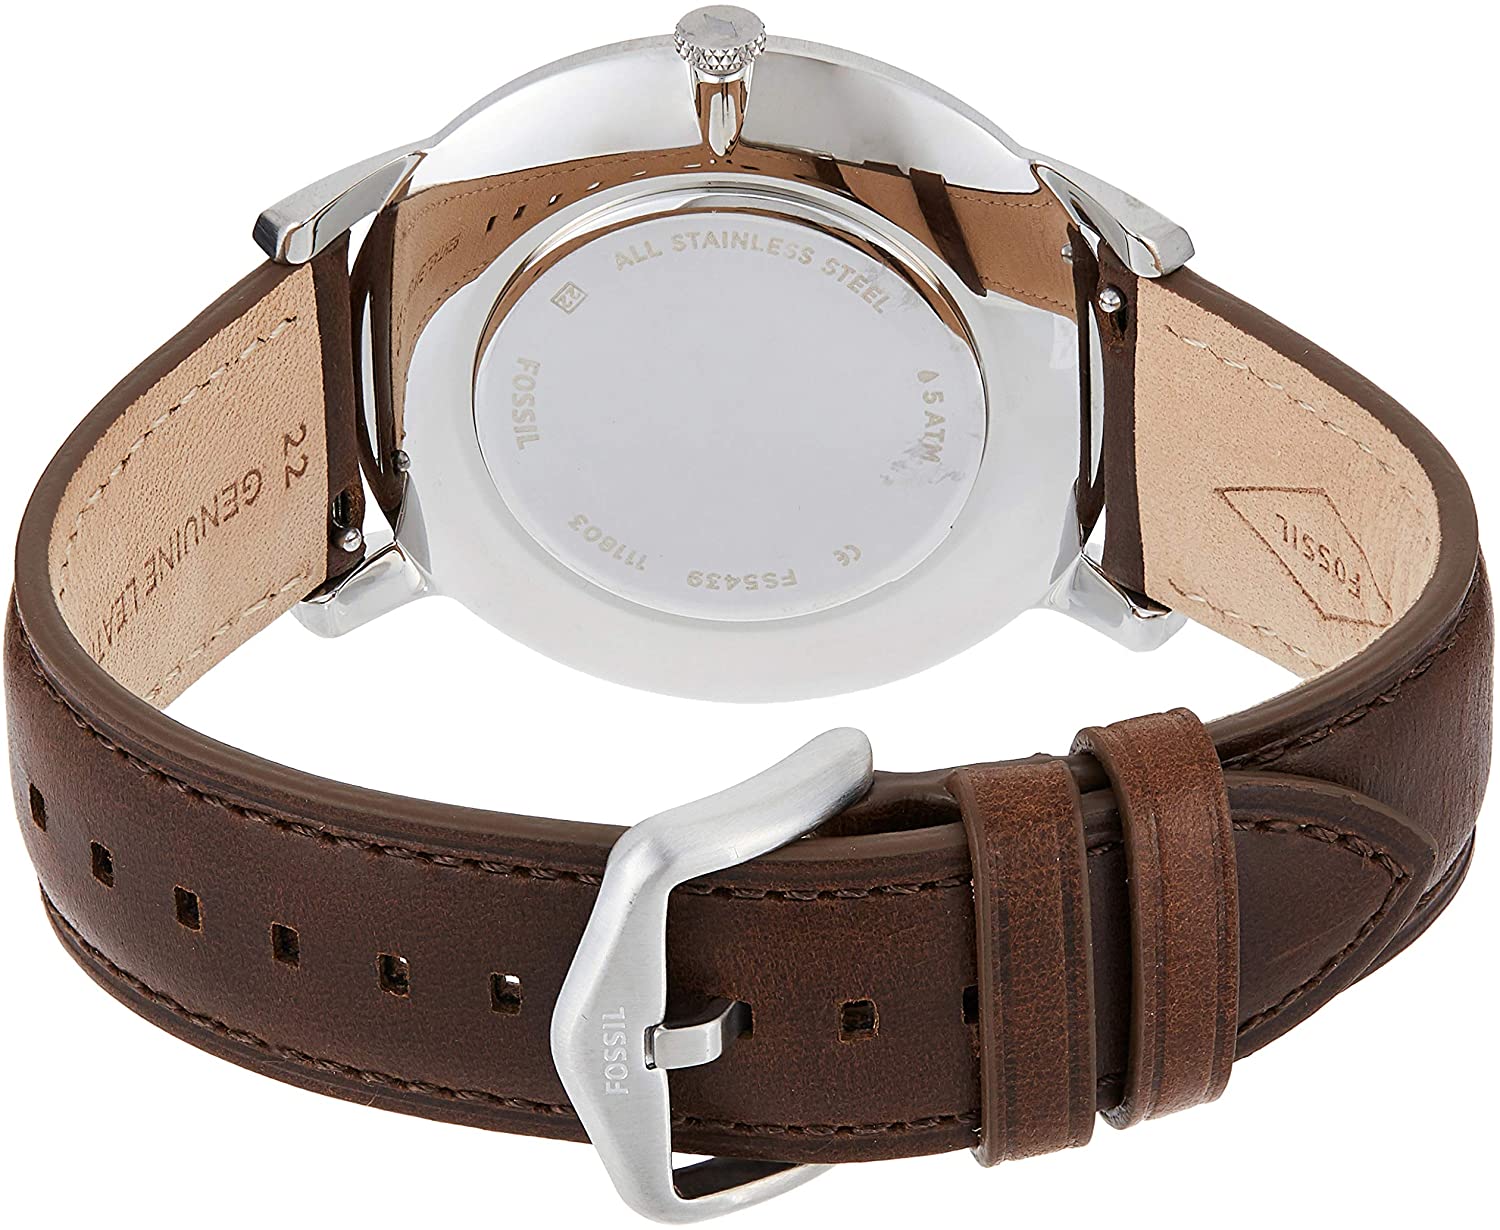 Fossil Men's Quartz Leather Watch FS5439